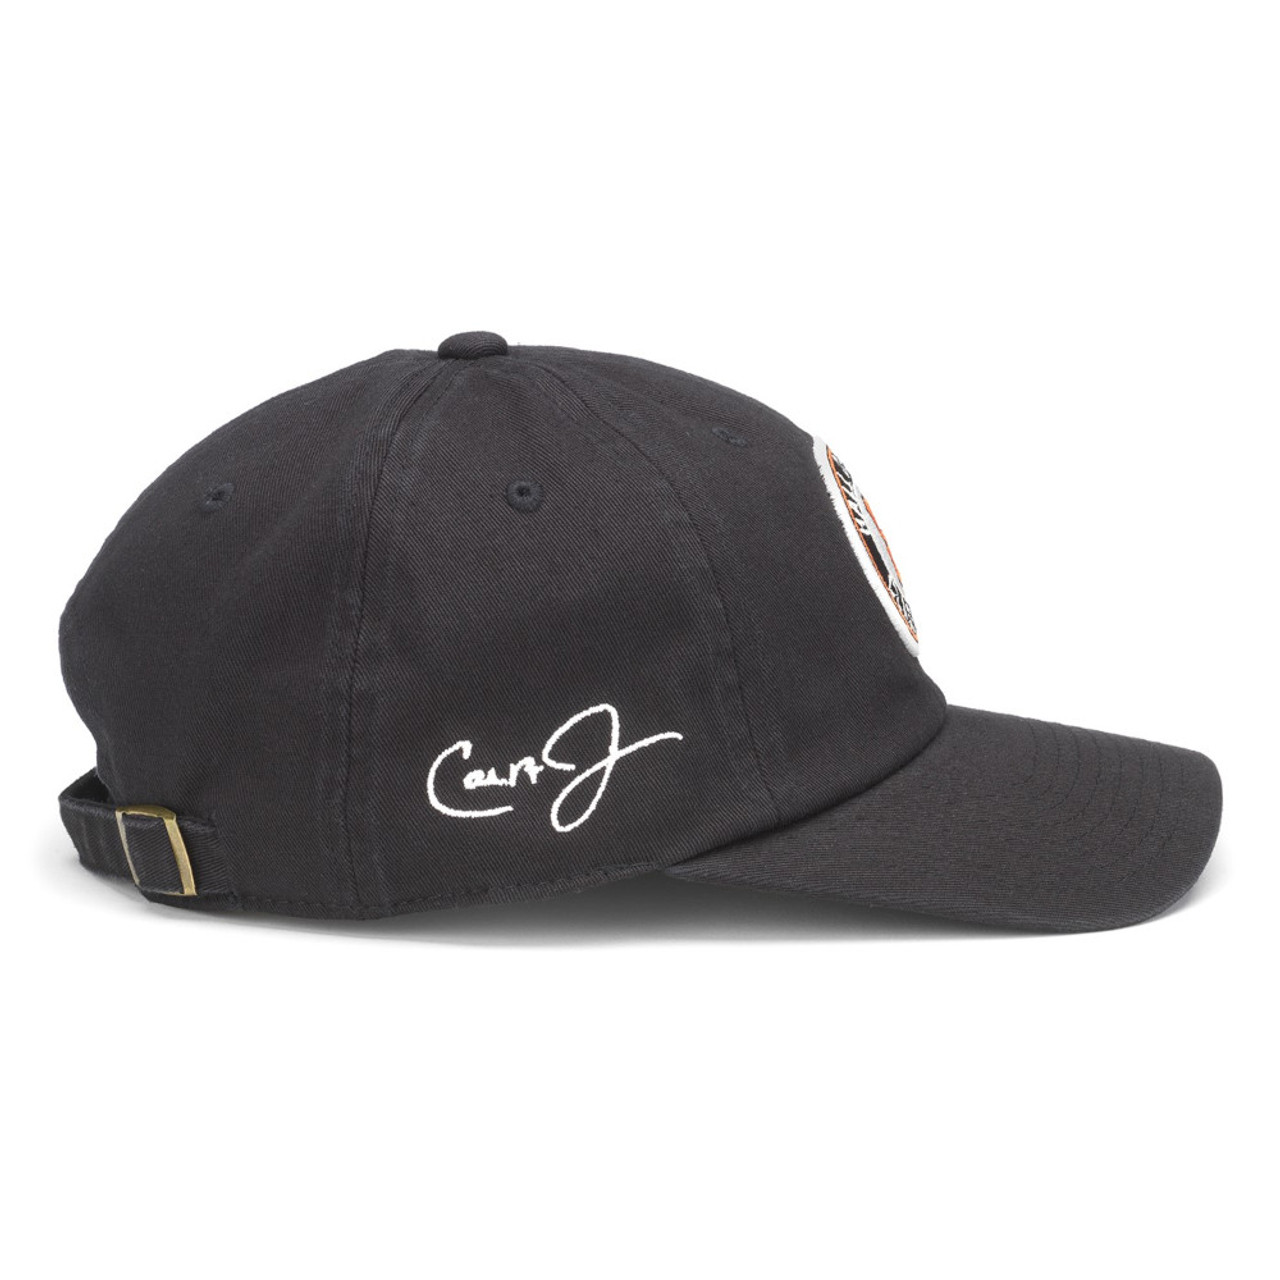 Men's Cal Ripken Jr. Signature and Jersey Number Black Adjustable Cap